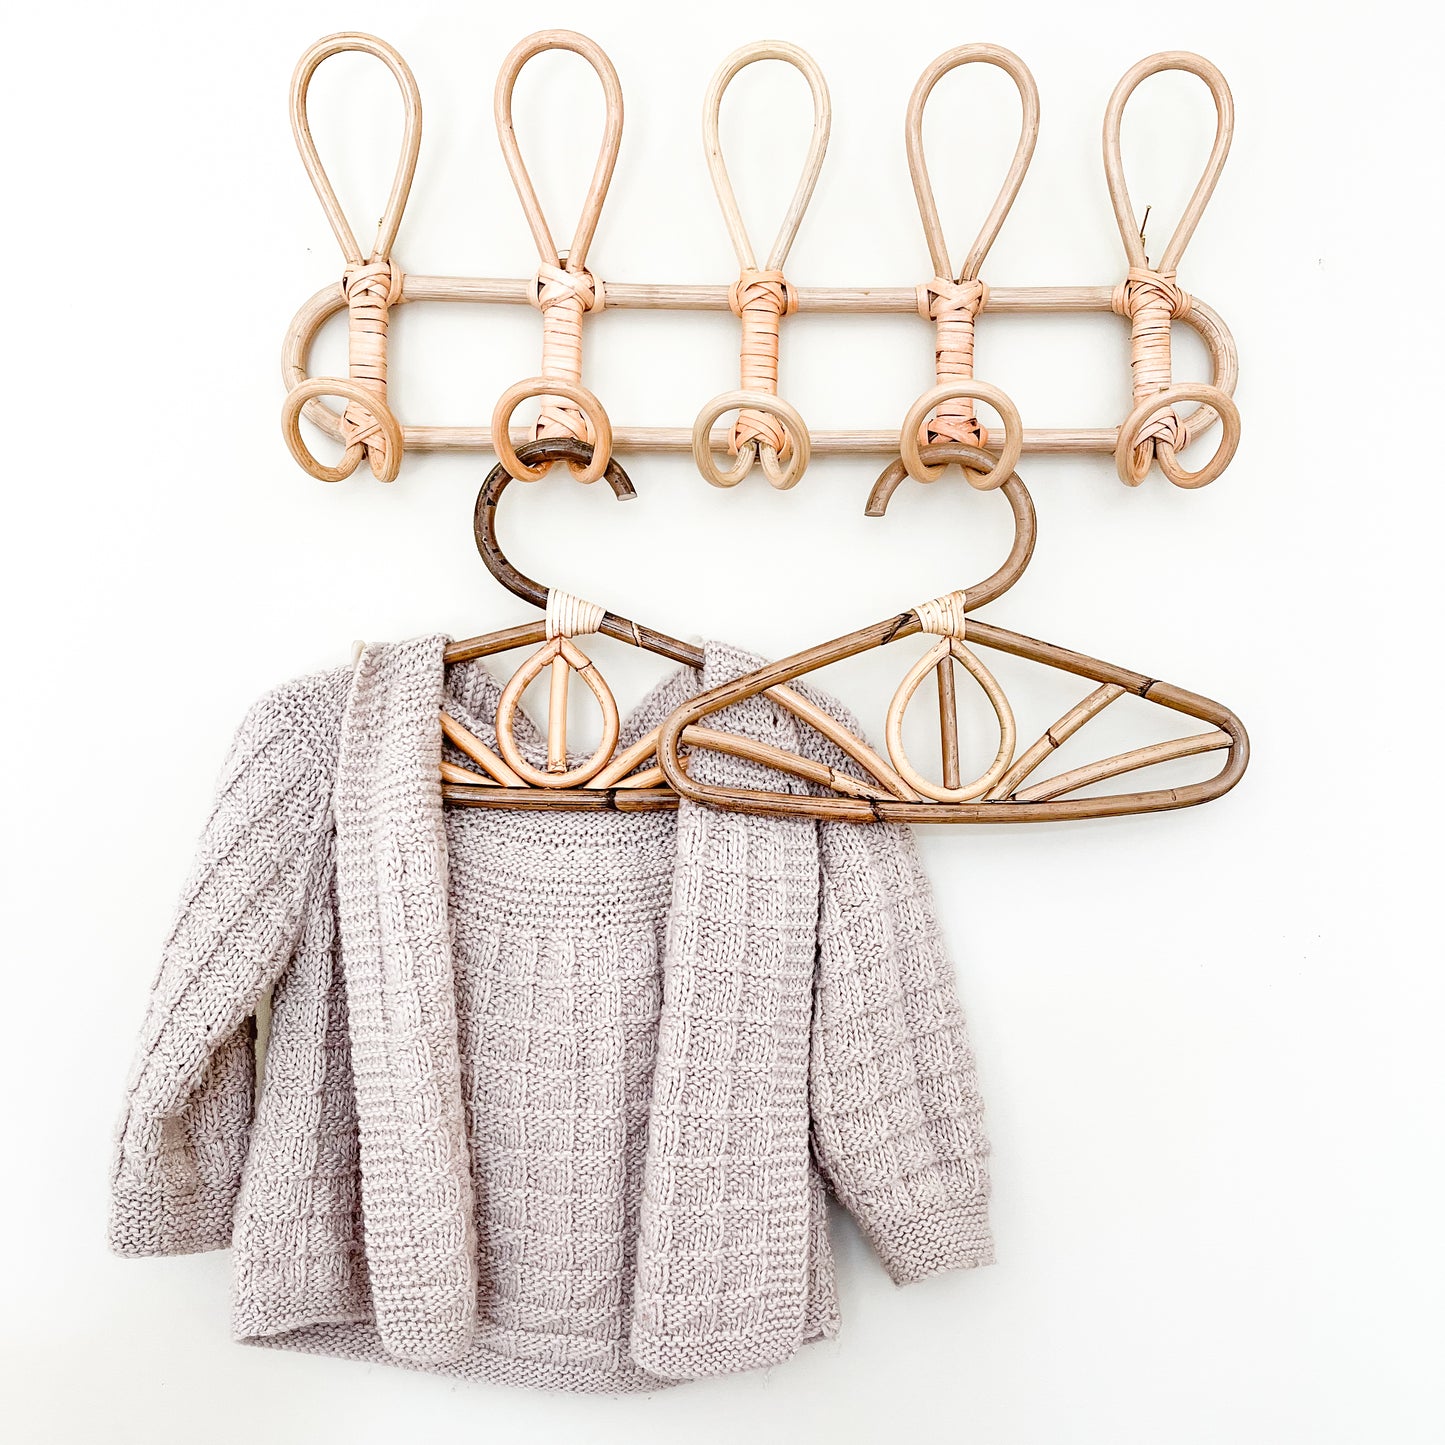 Clothes Hangers - Little ones